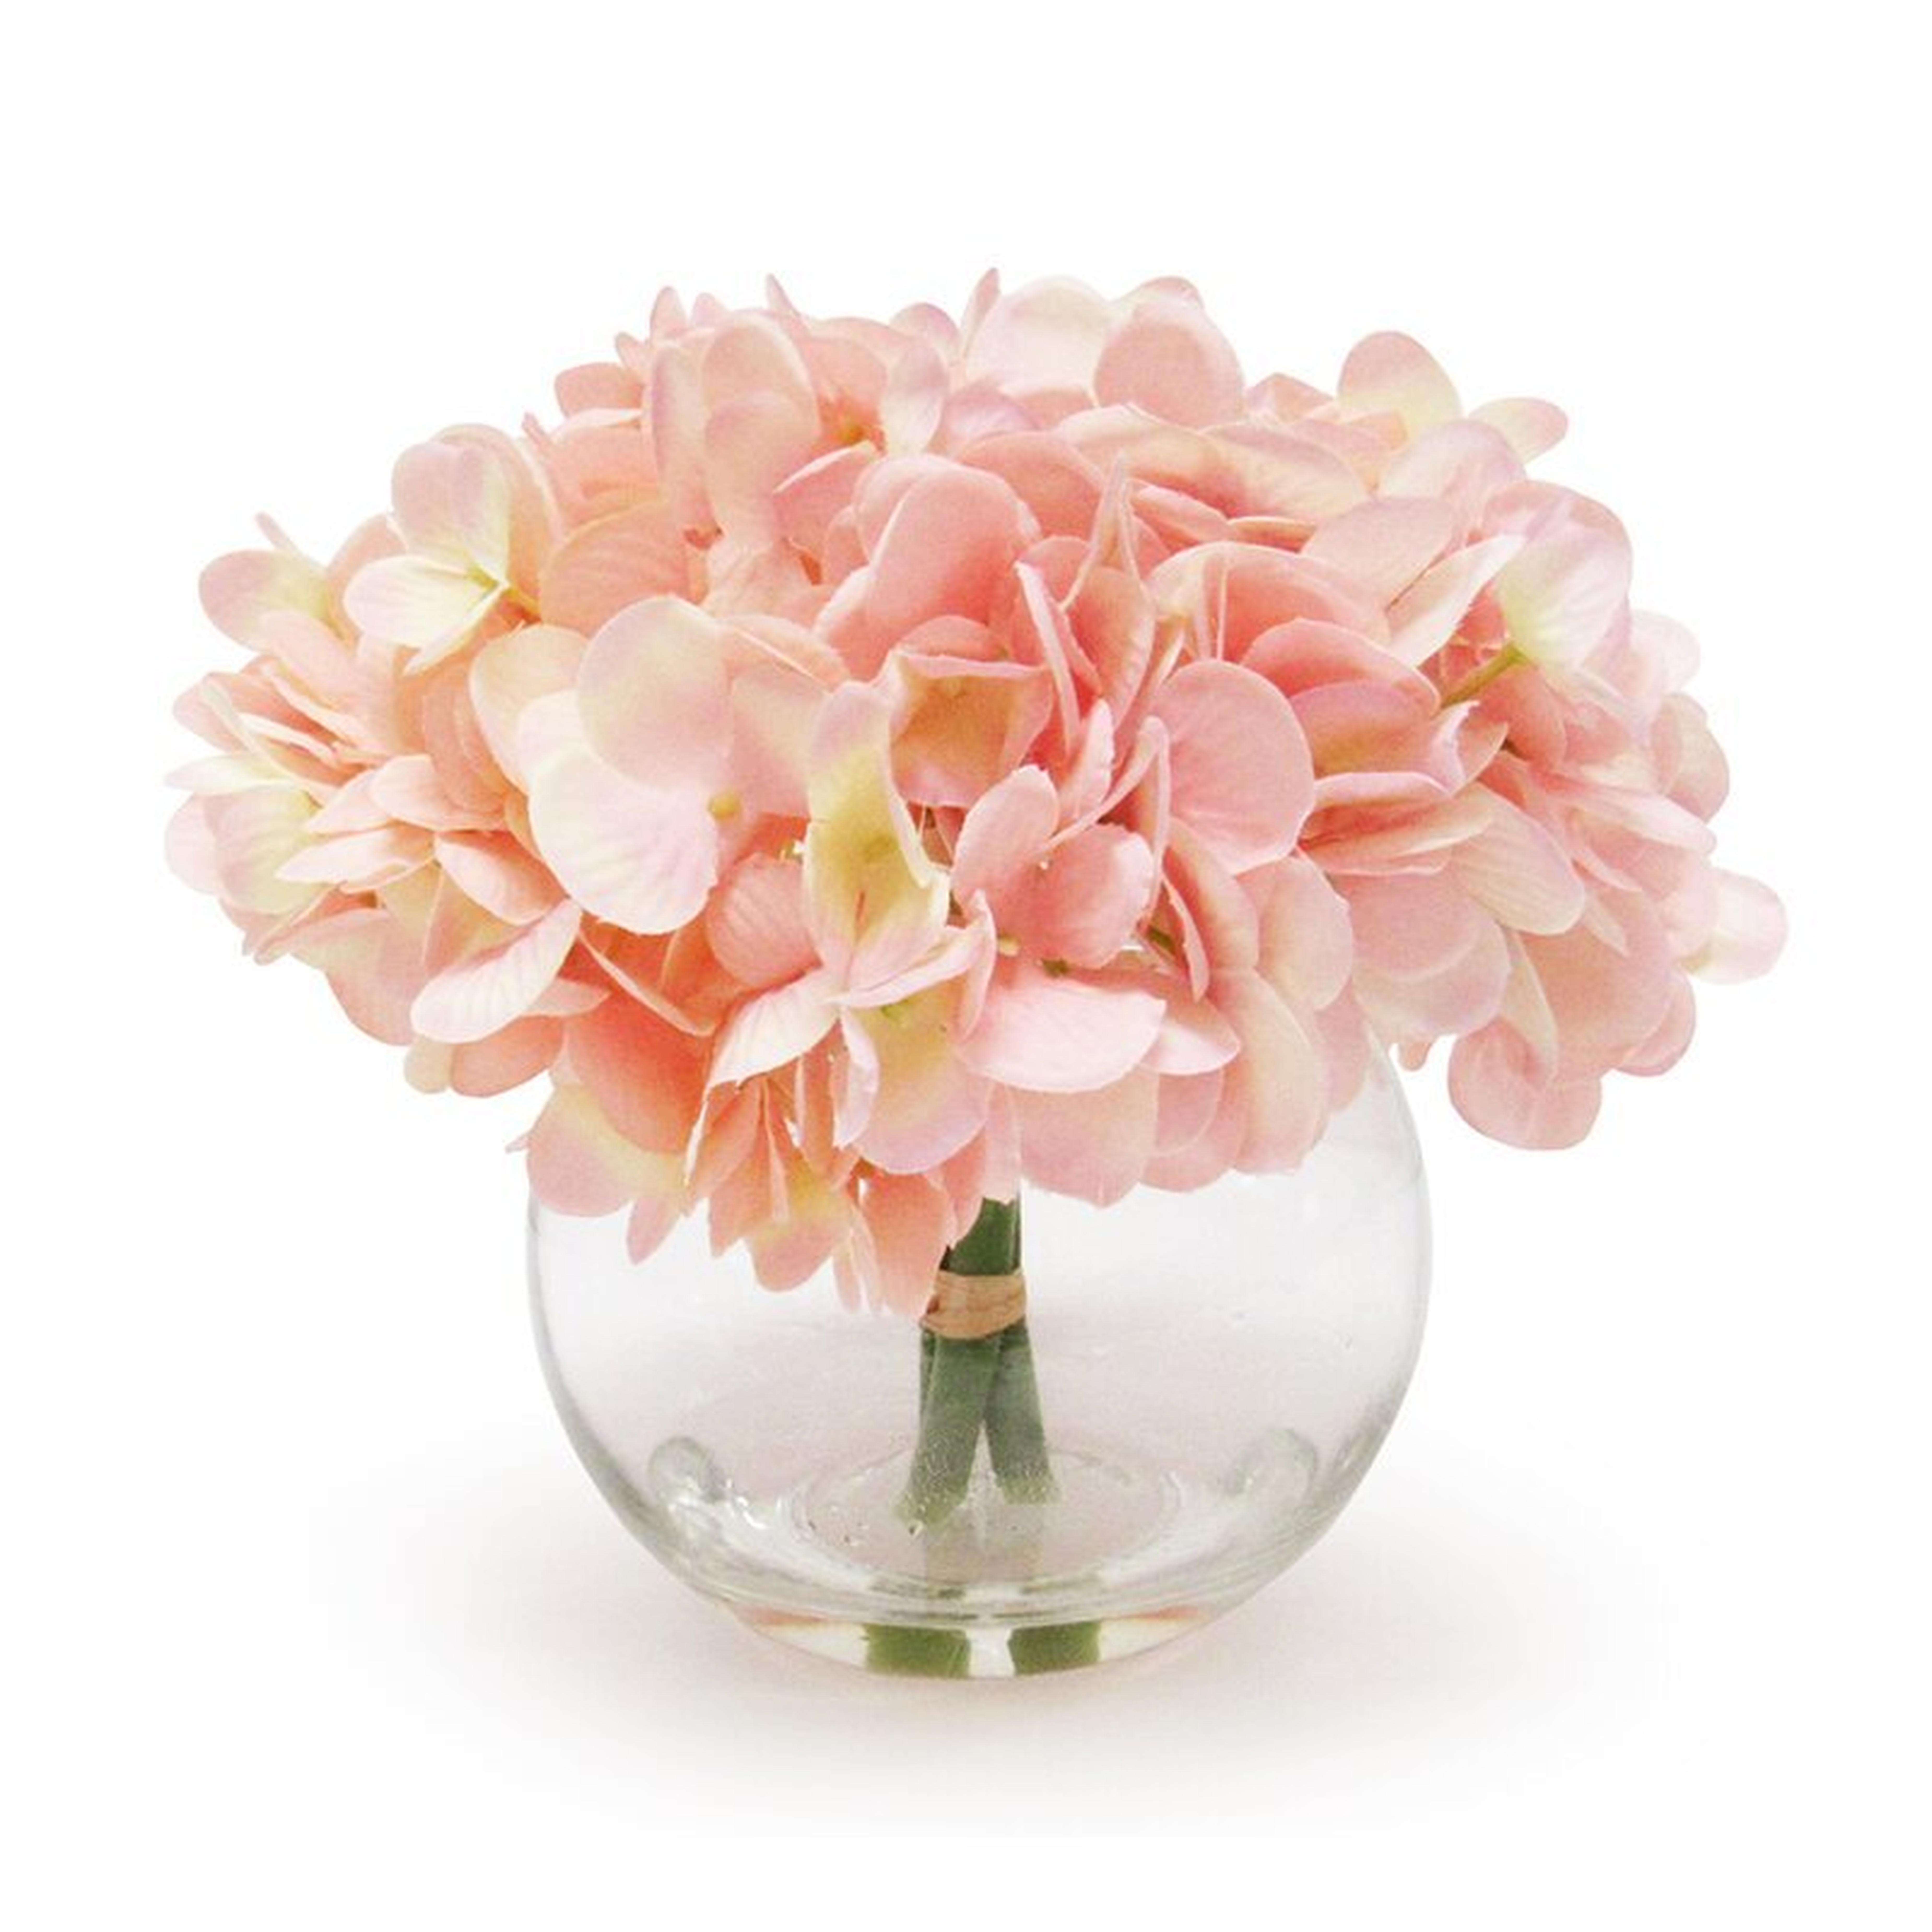 Hydrangea Centerpieces in Vase, Pink - Wayfair